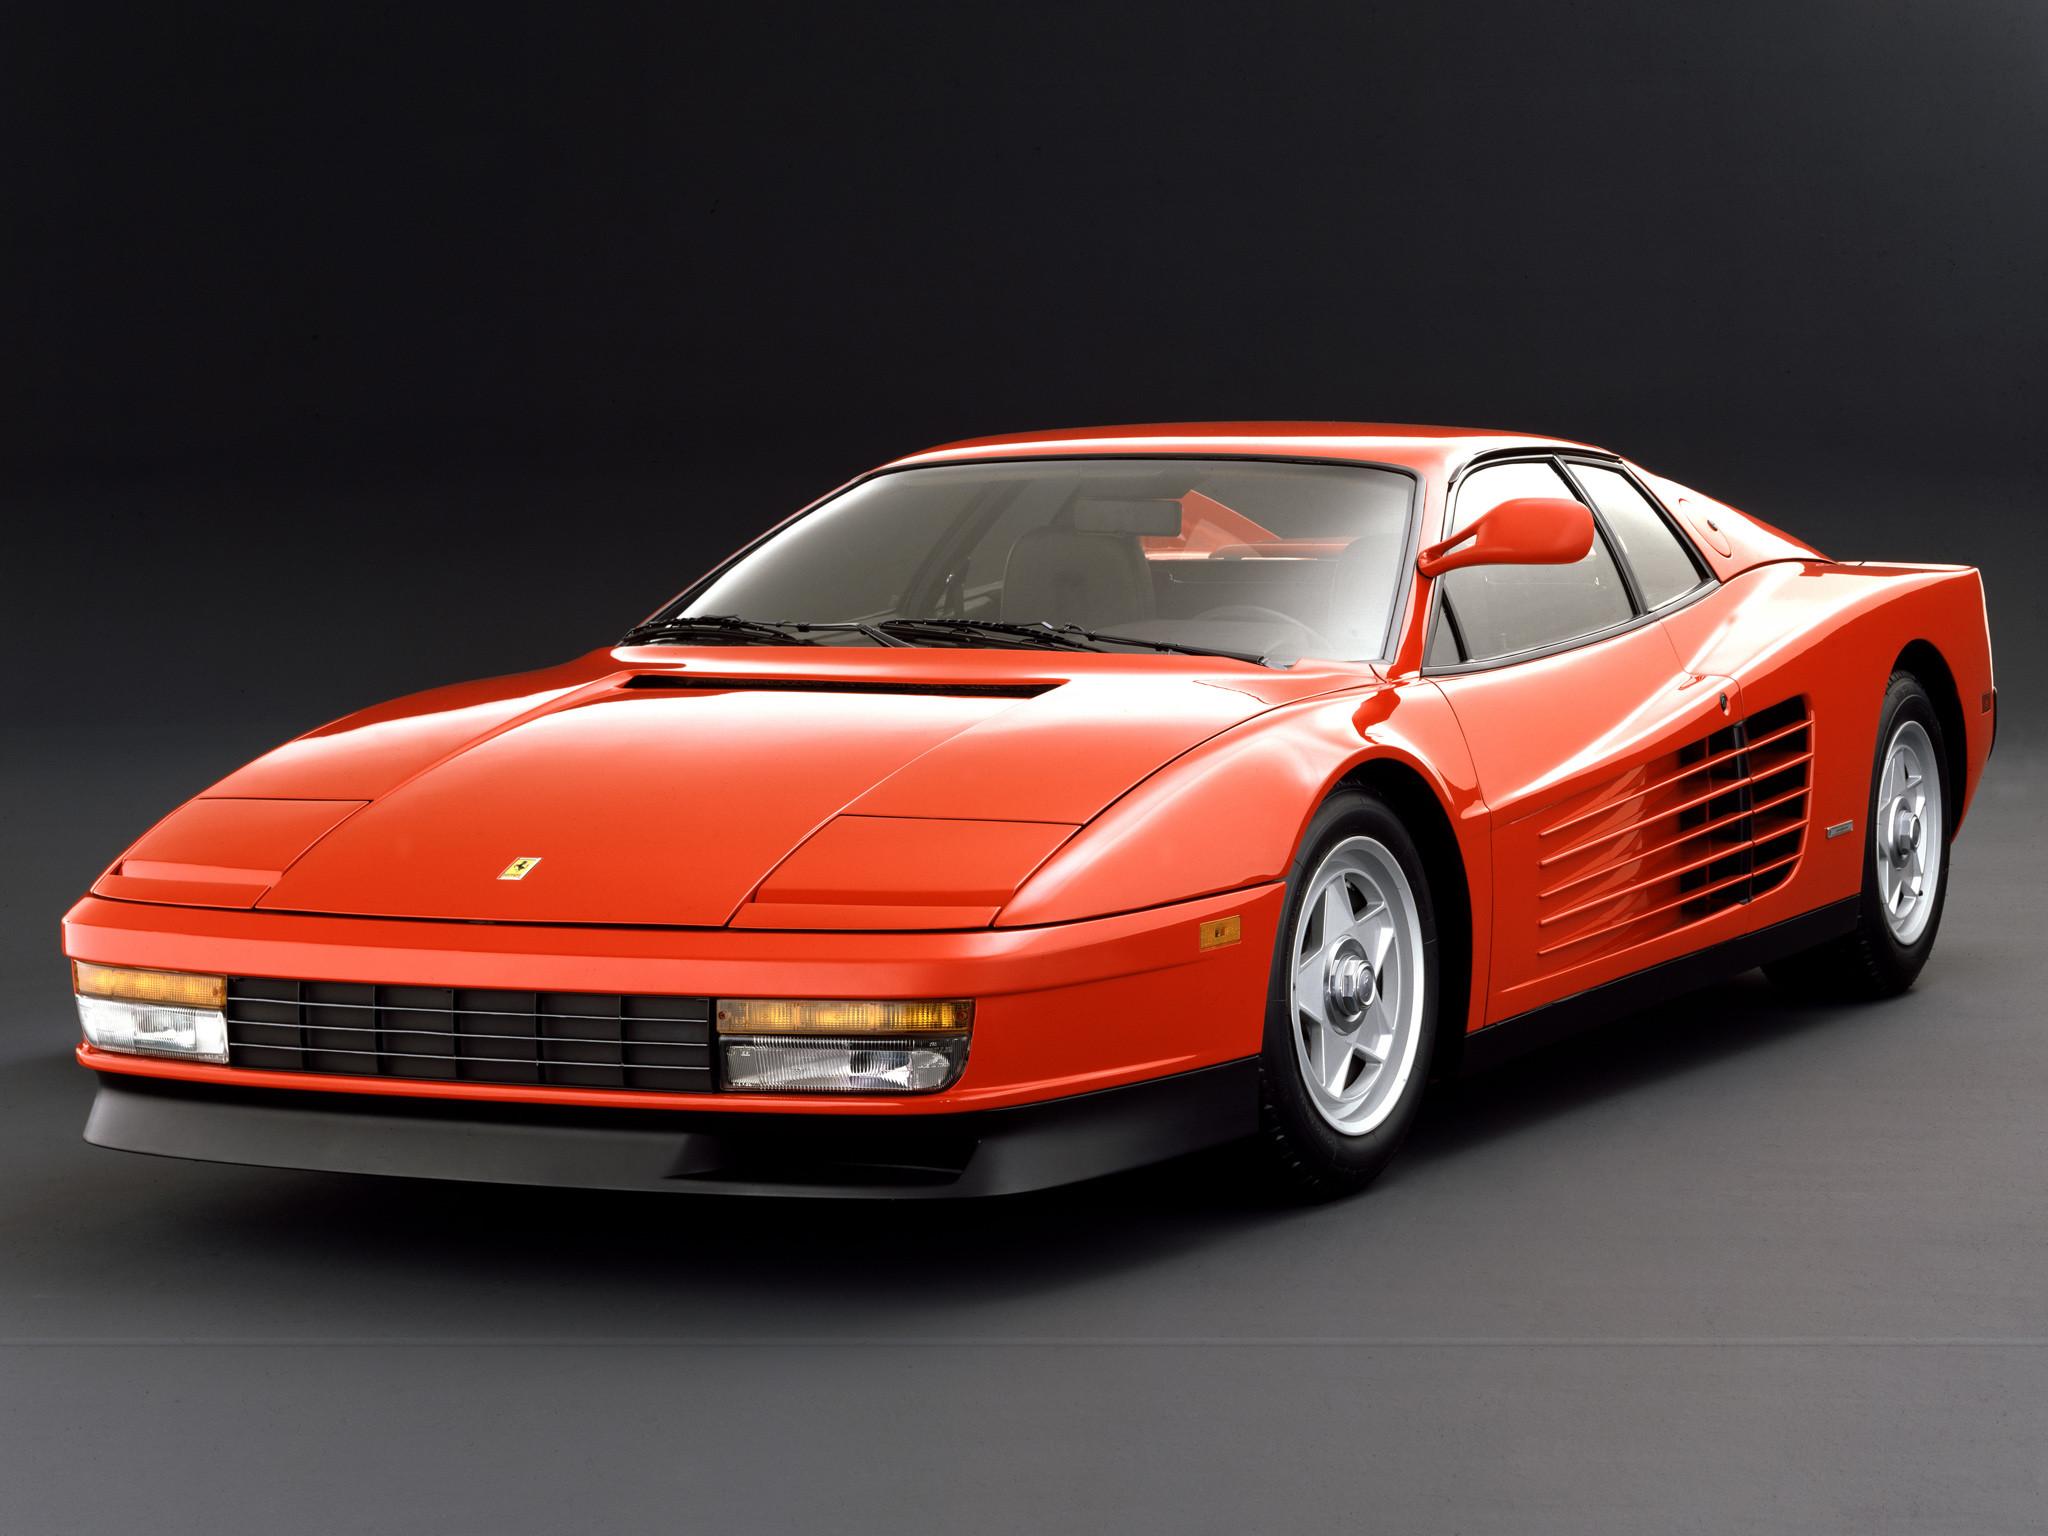 Ferrari Testarossa Wallpaper background picture